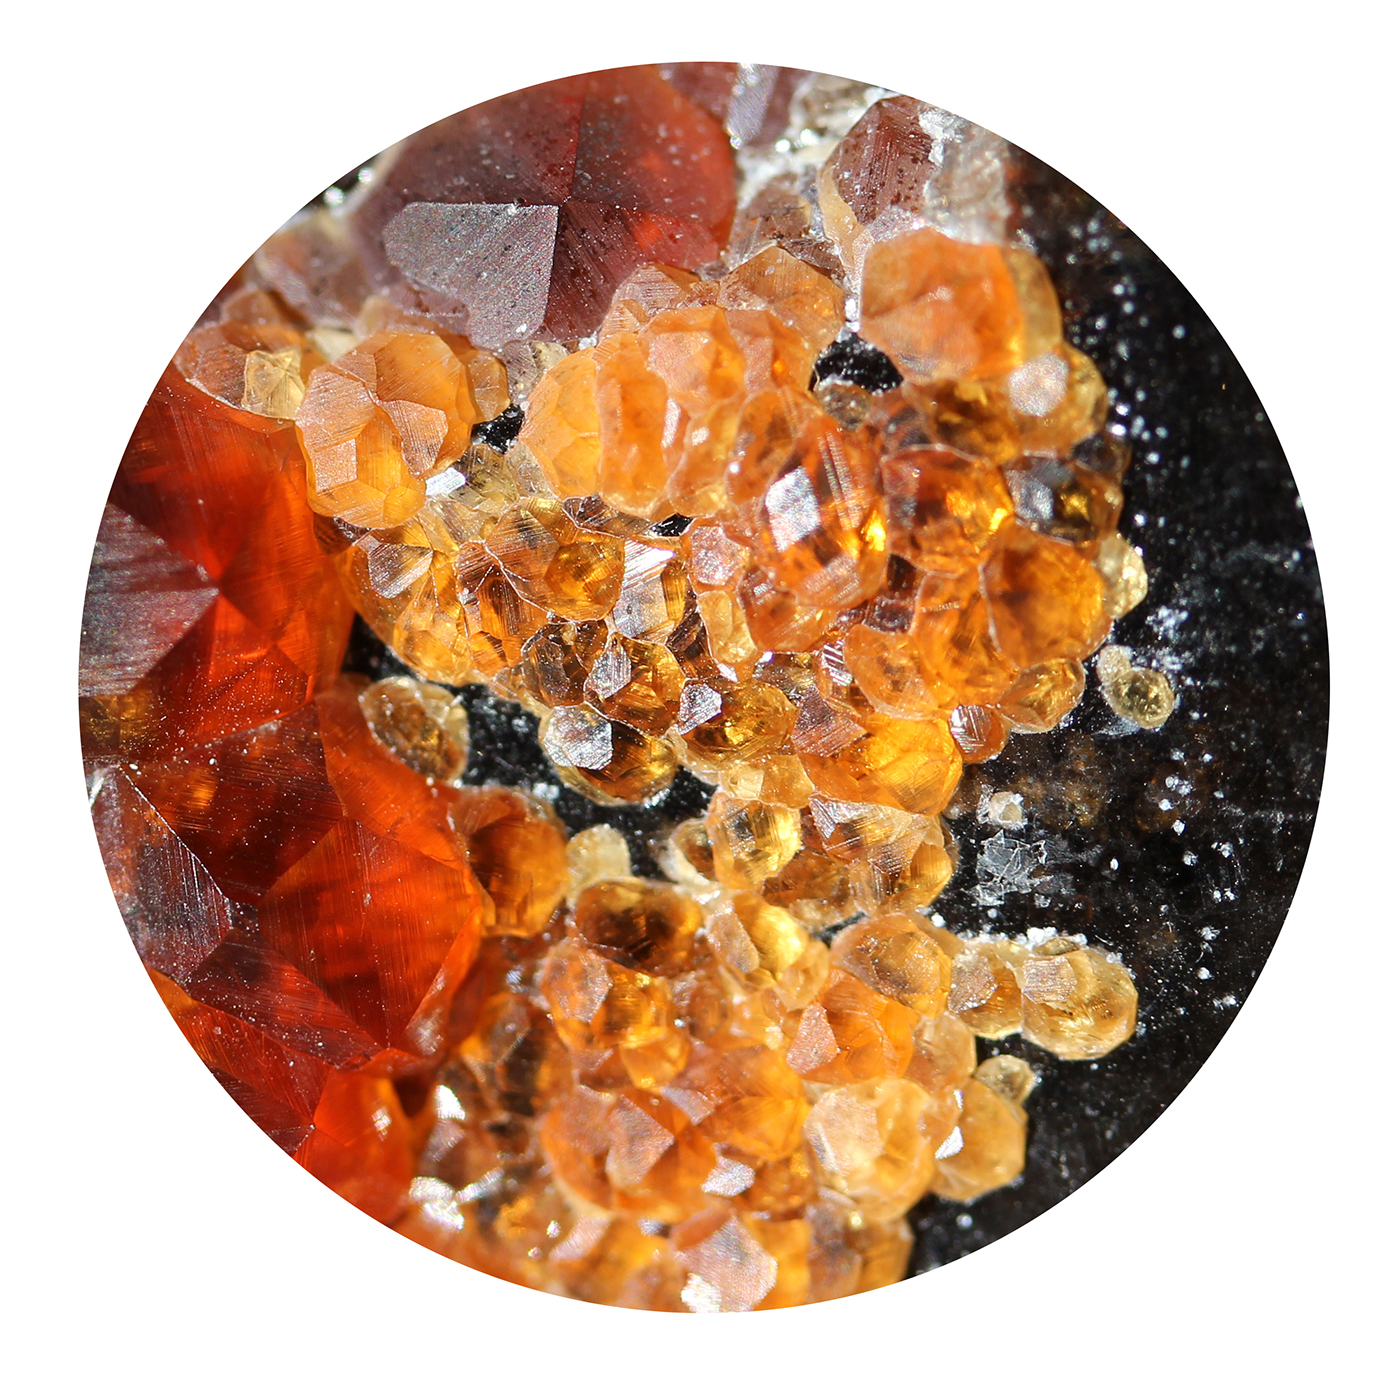 garnet crystal rock mineral orange red macro close-up